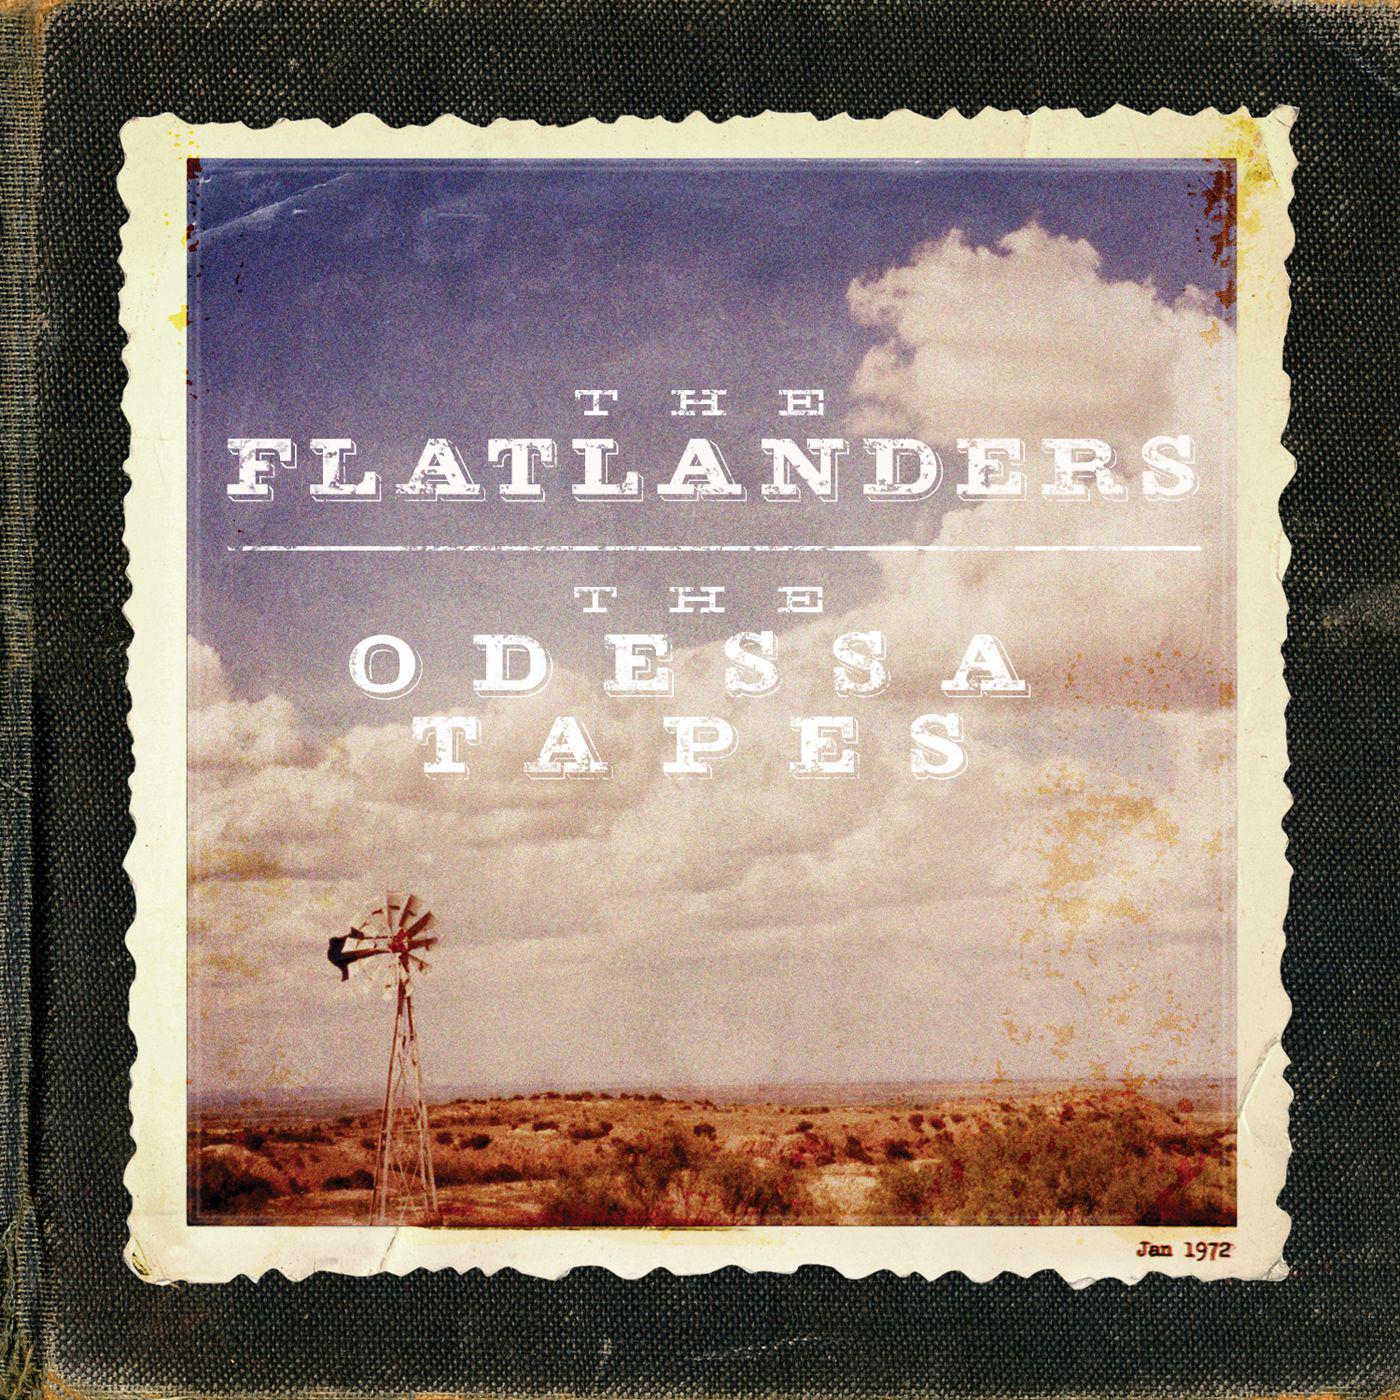 The Flatlanders - Stars in My Life